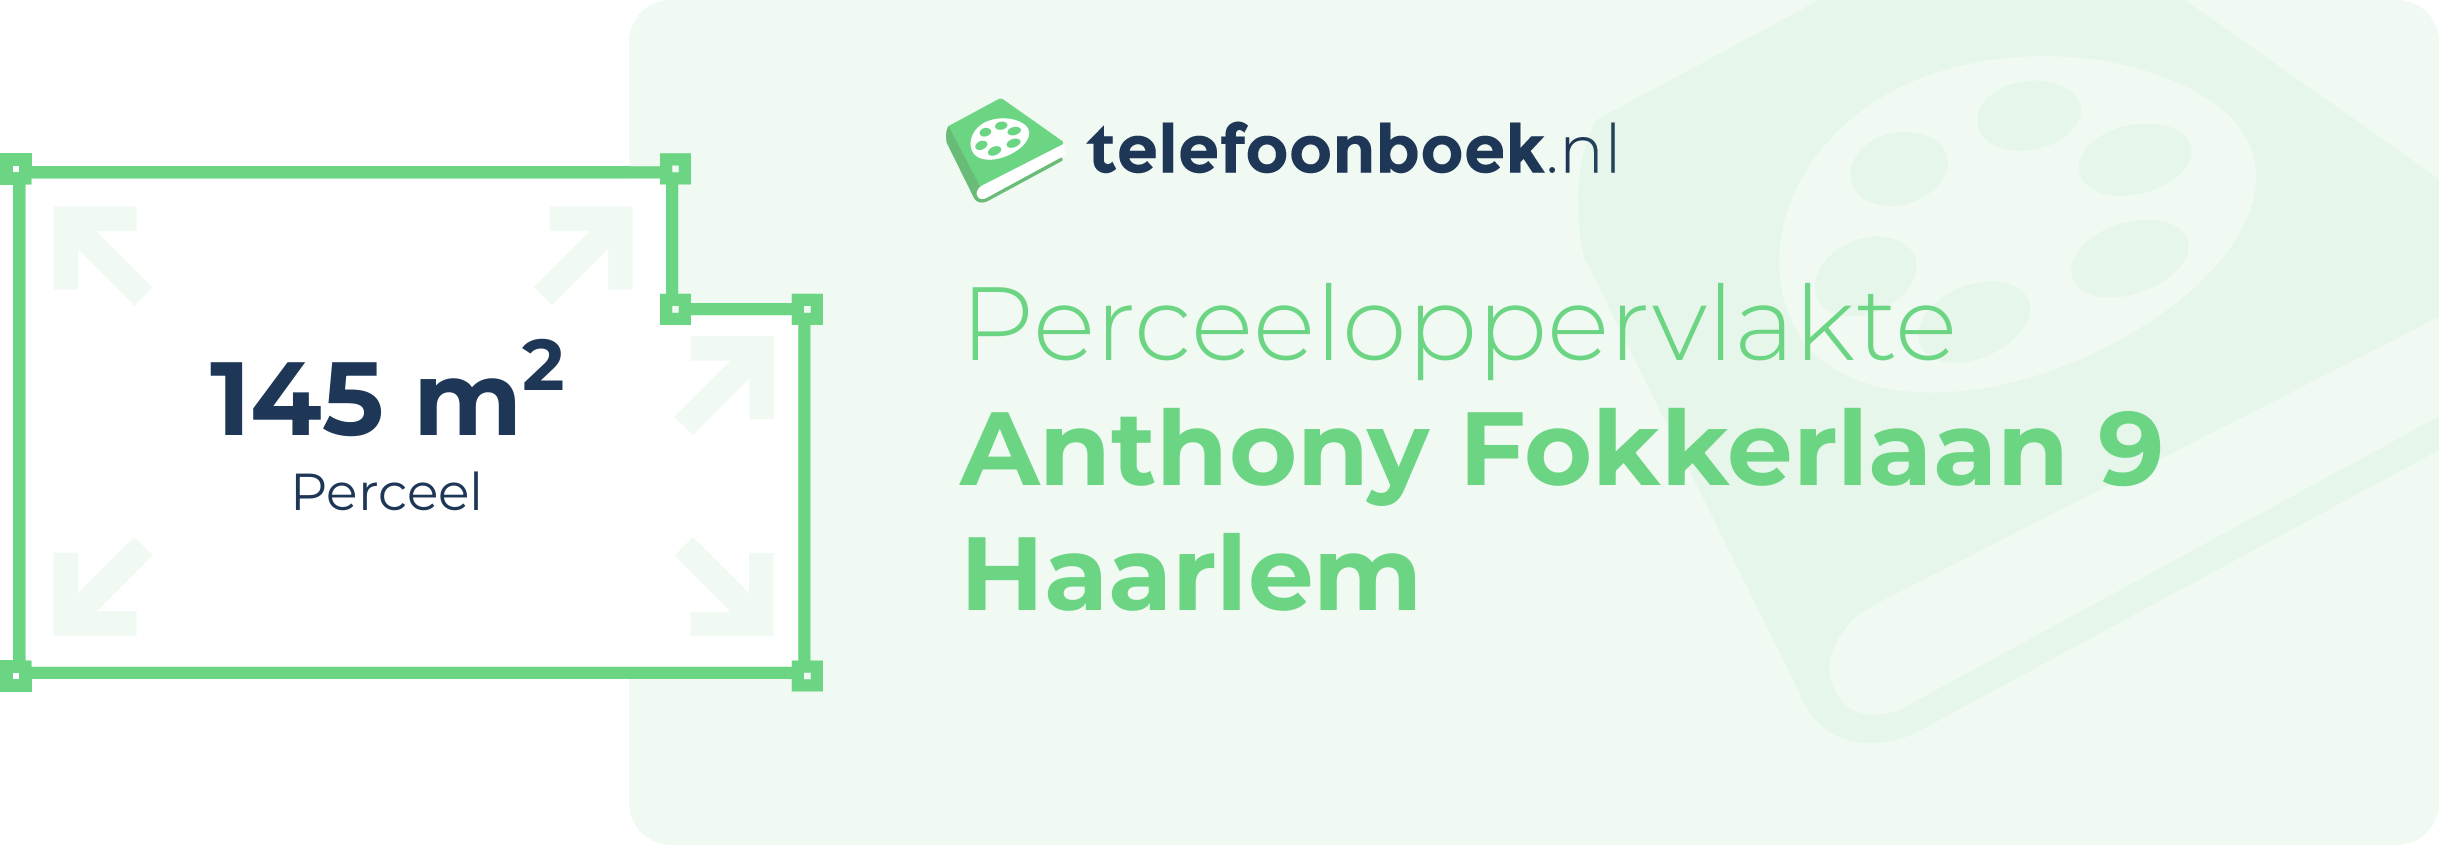 Perceeloppervlakte Anthony Fokkerlaan 9 Haarlem